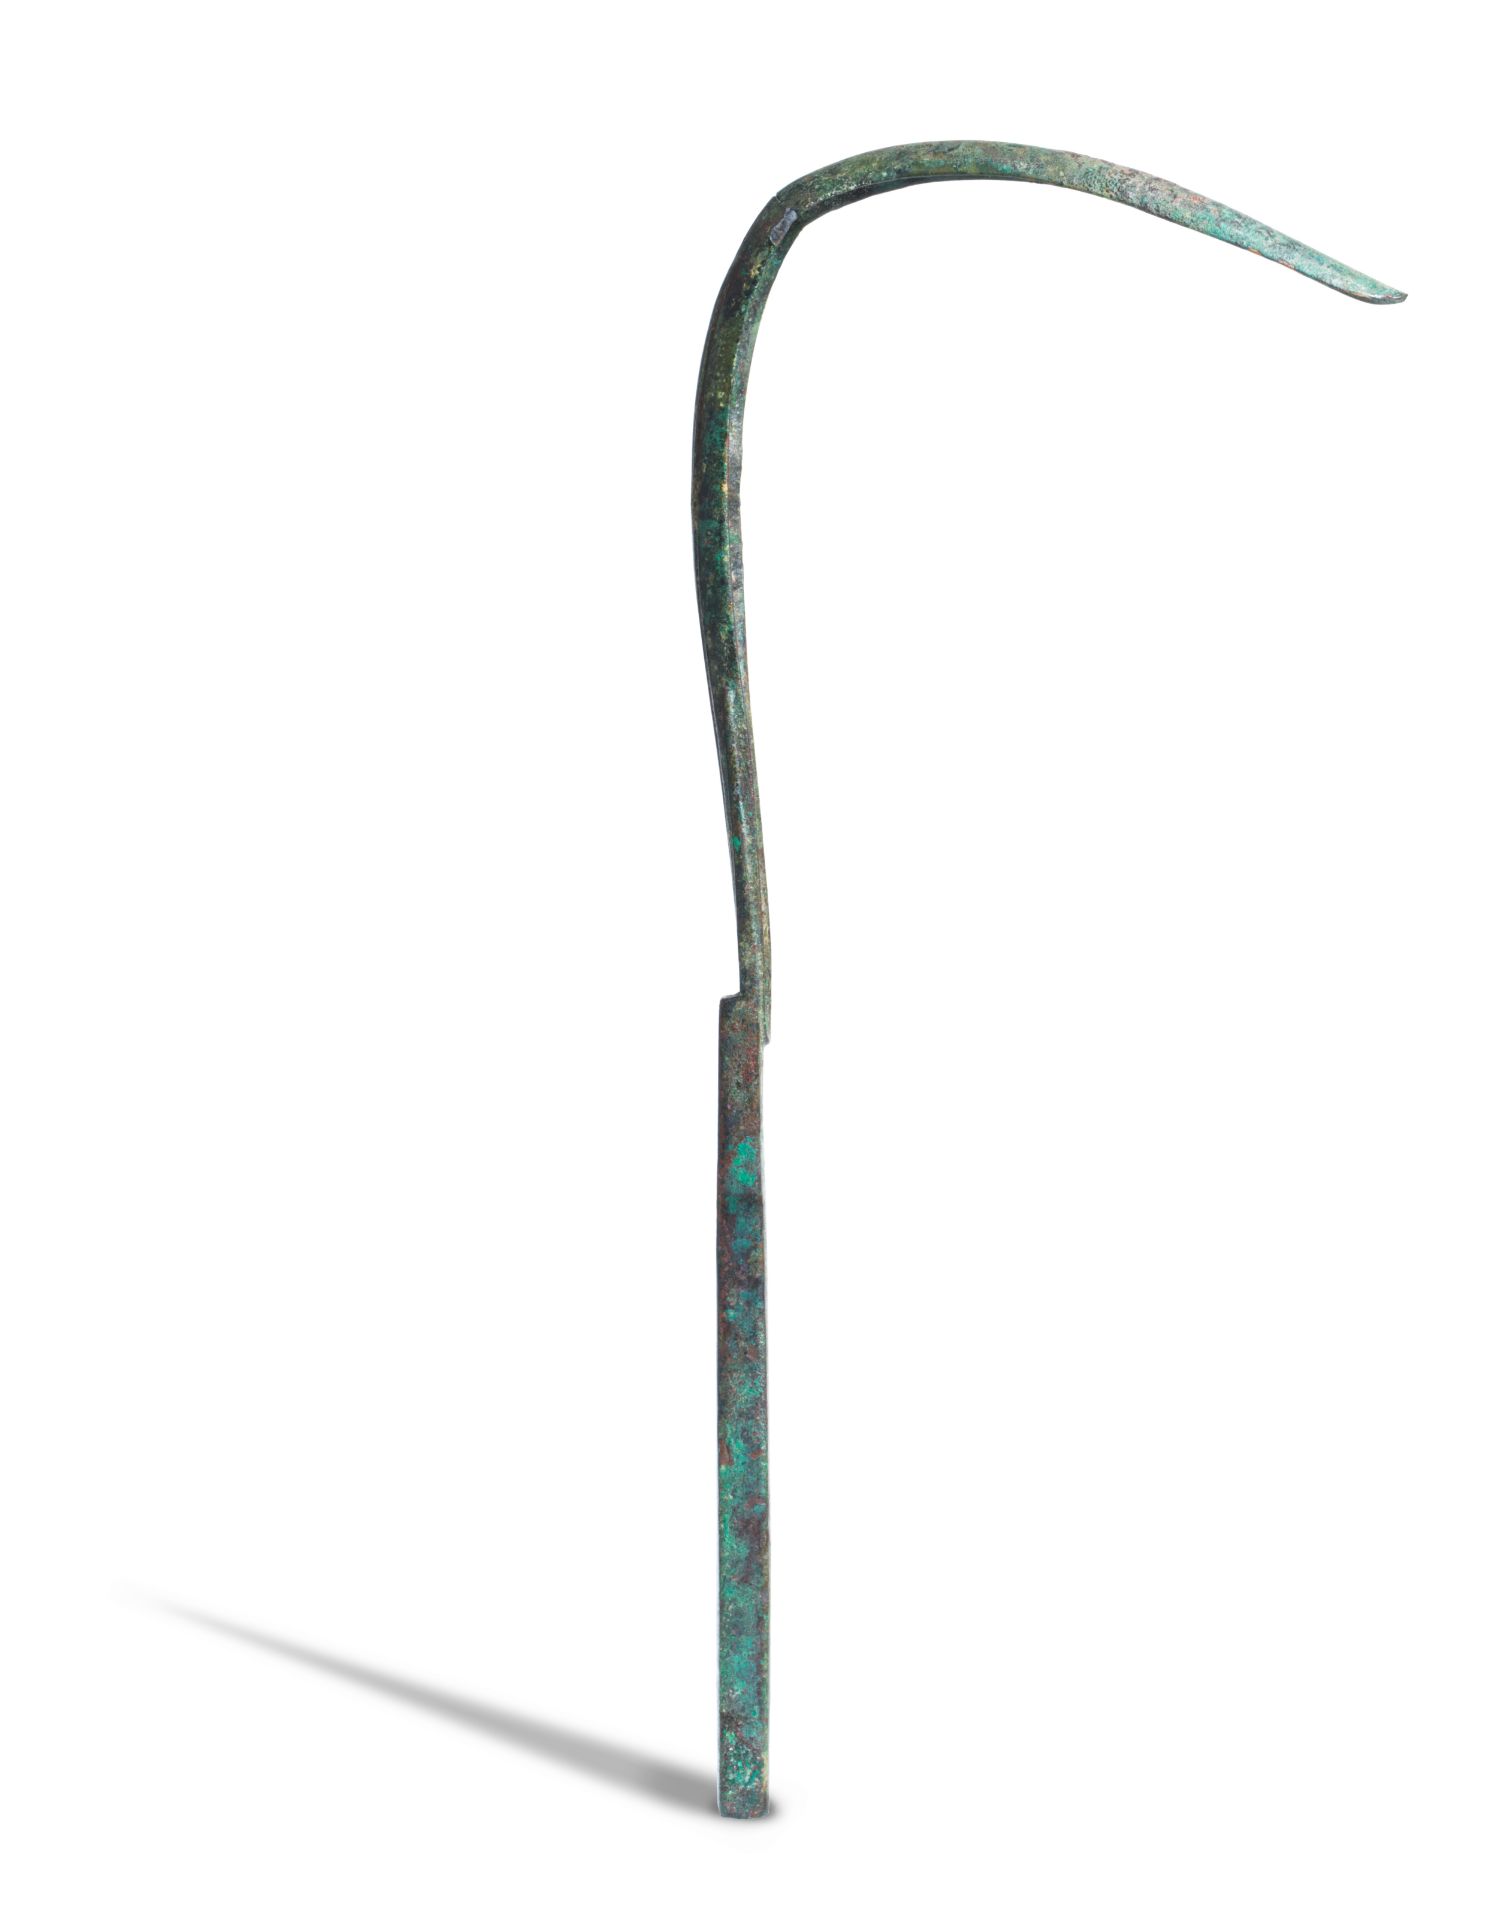 A Roman bronze strigil